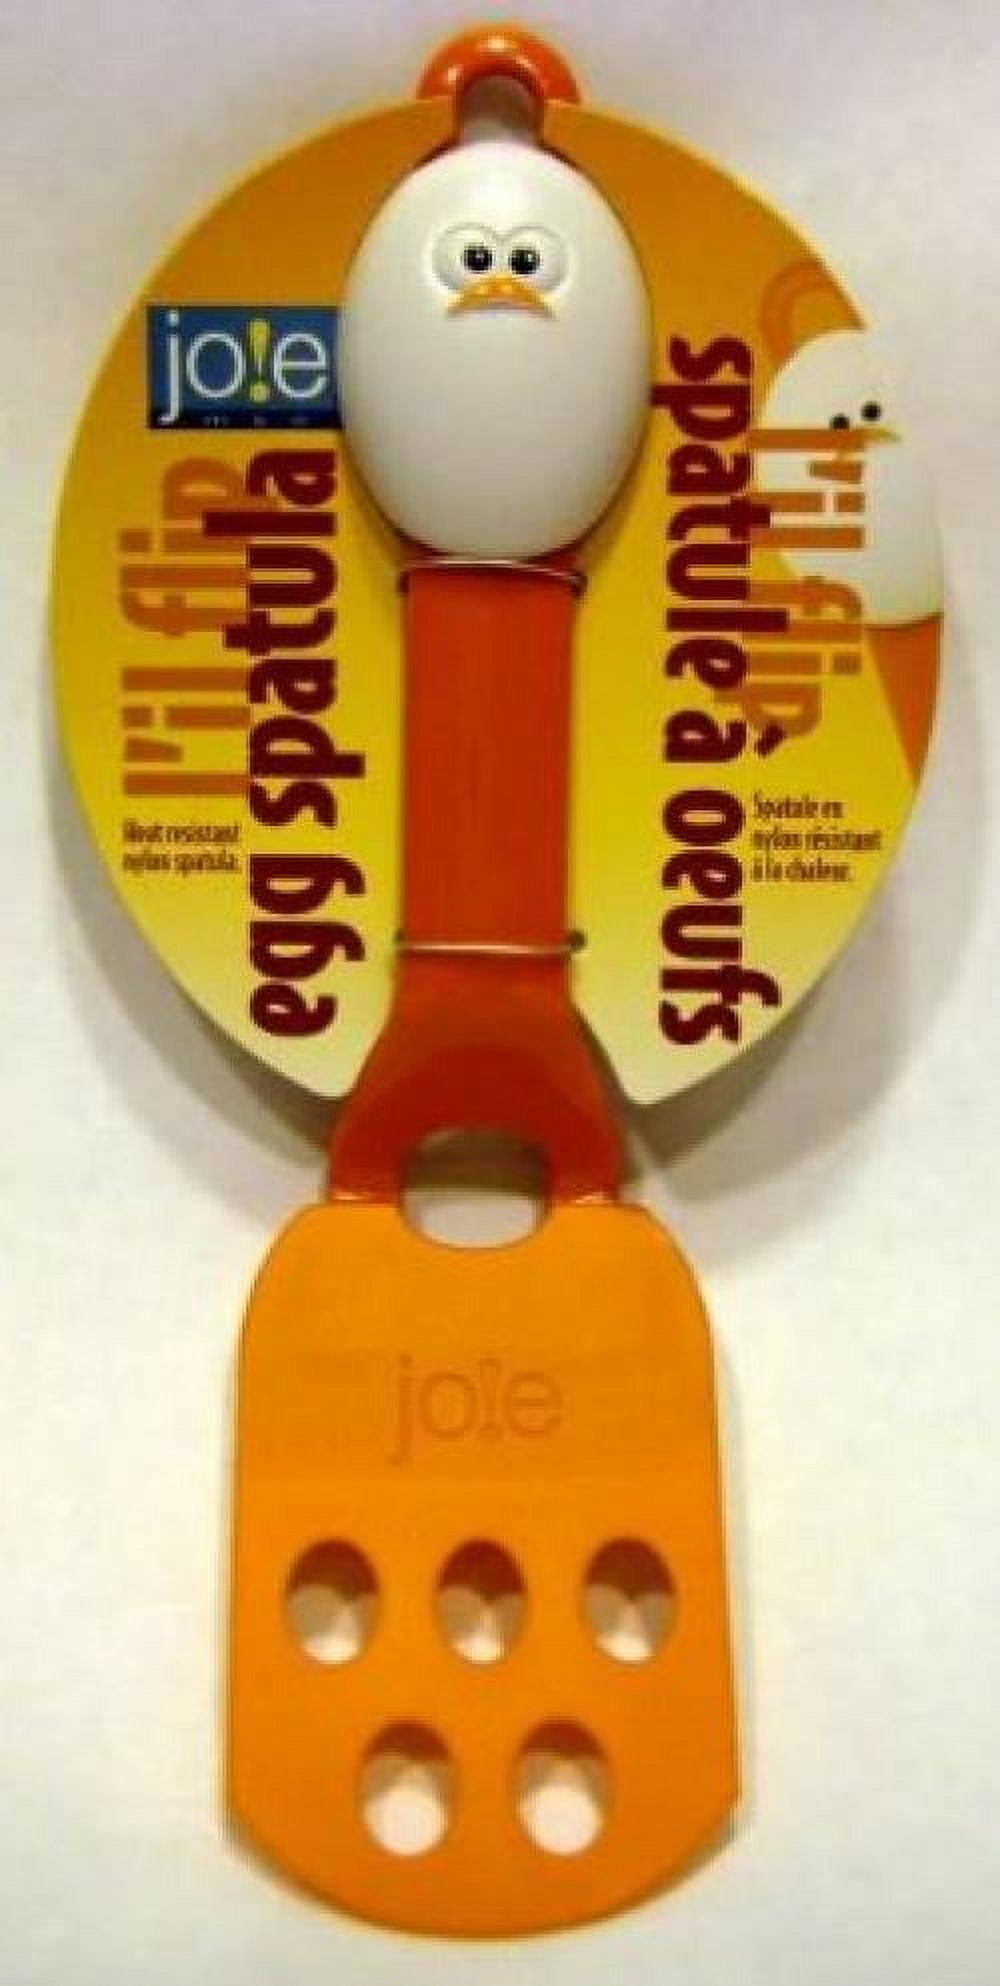 Joie Lil Flip Egg Spatula